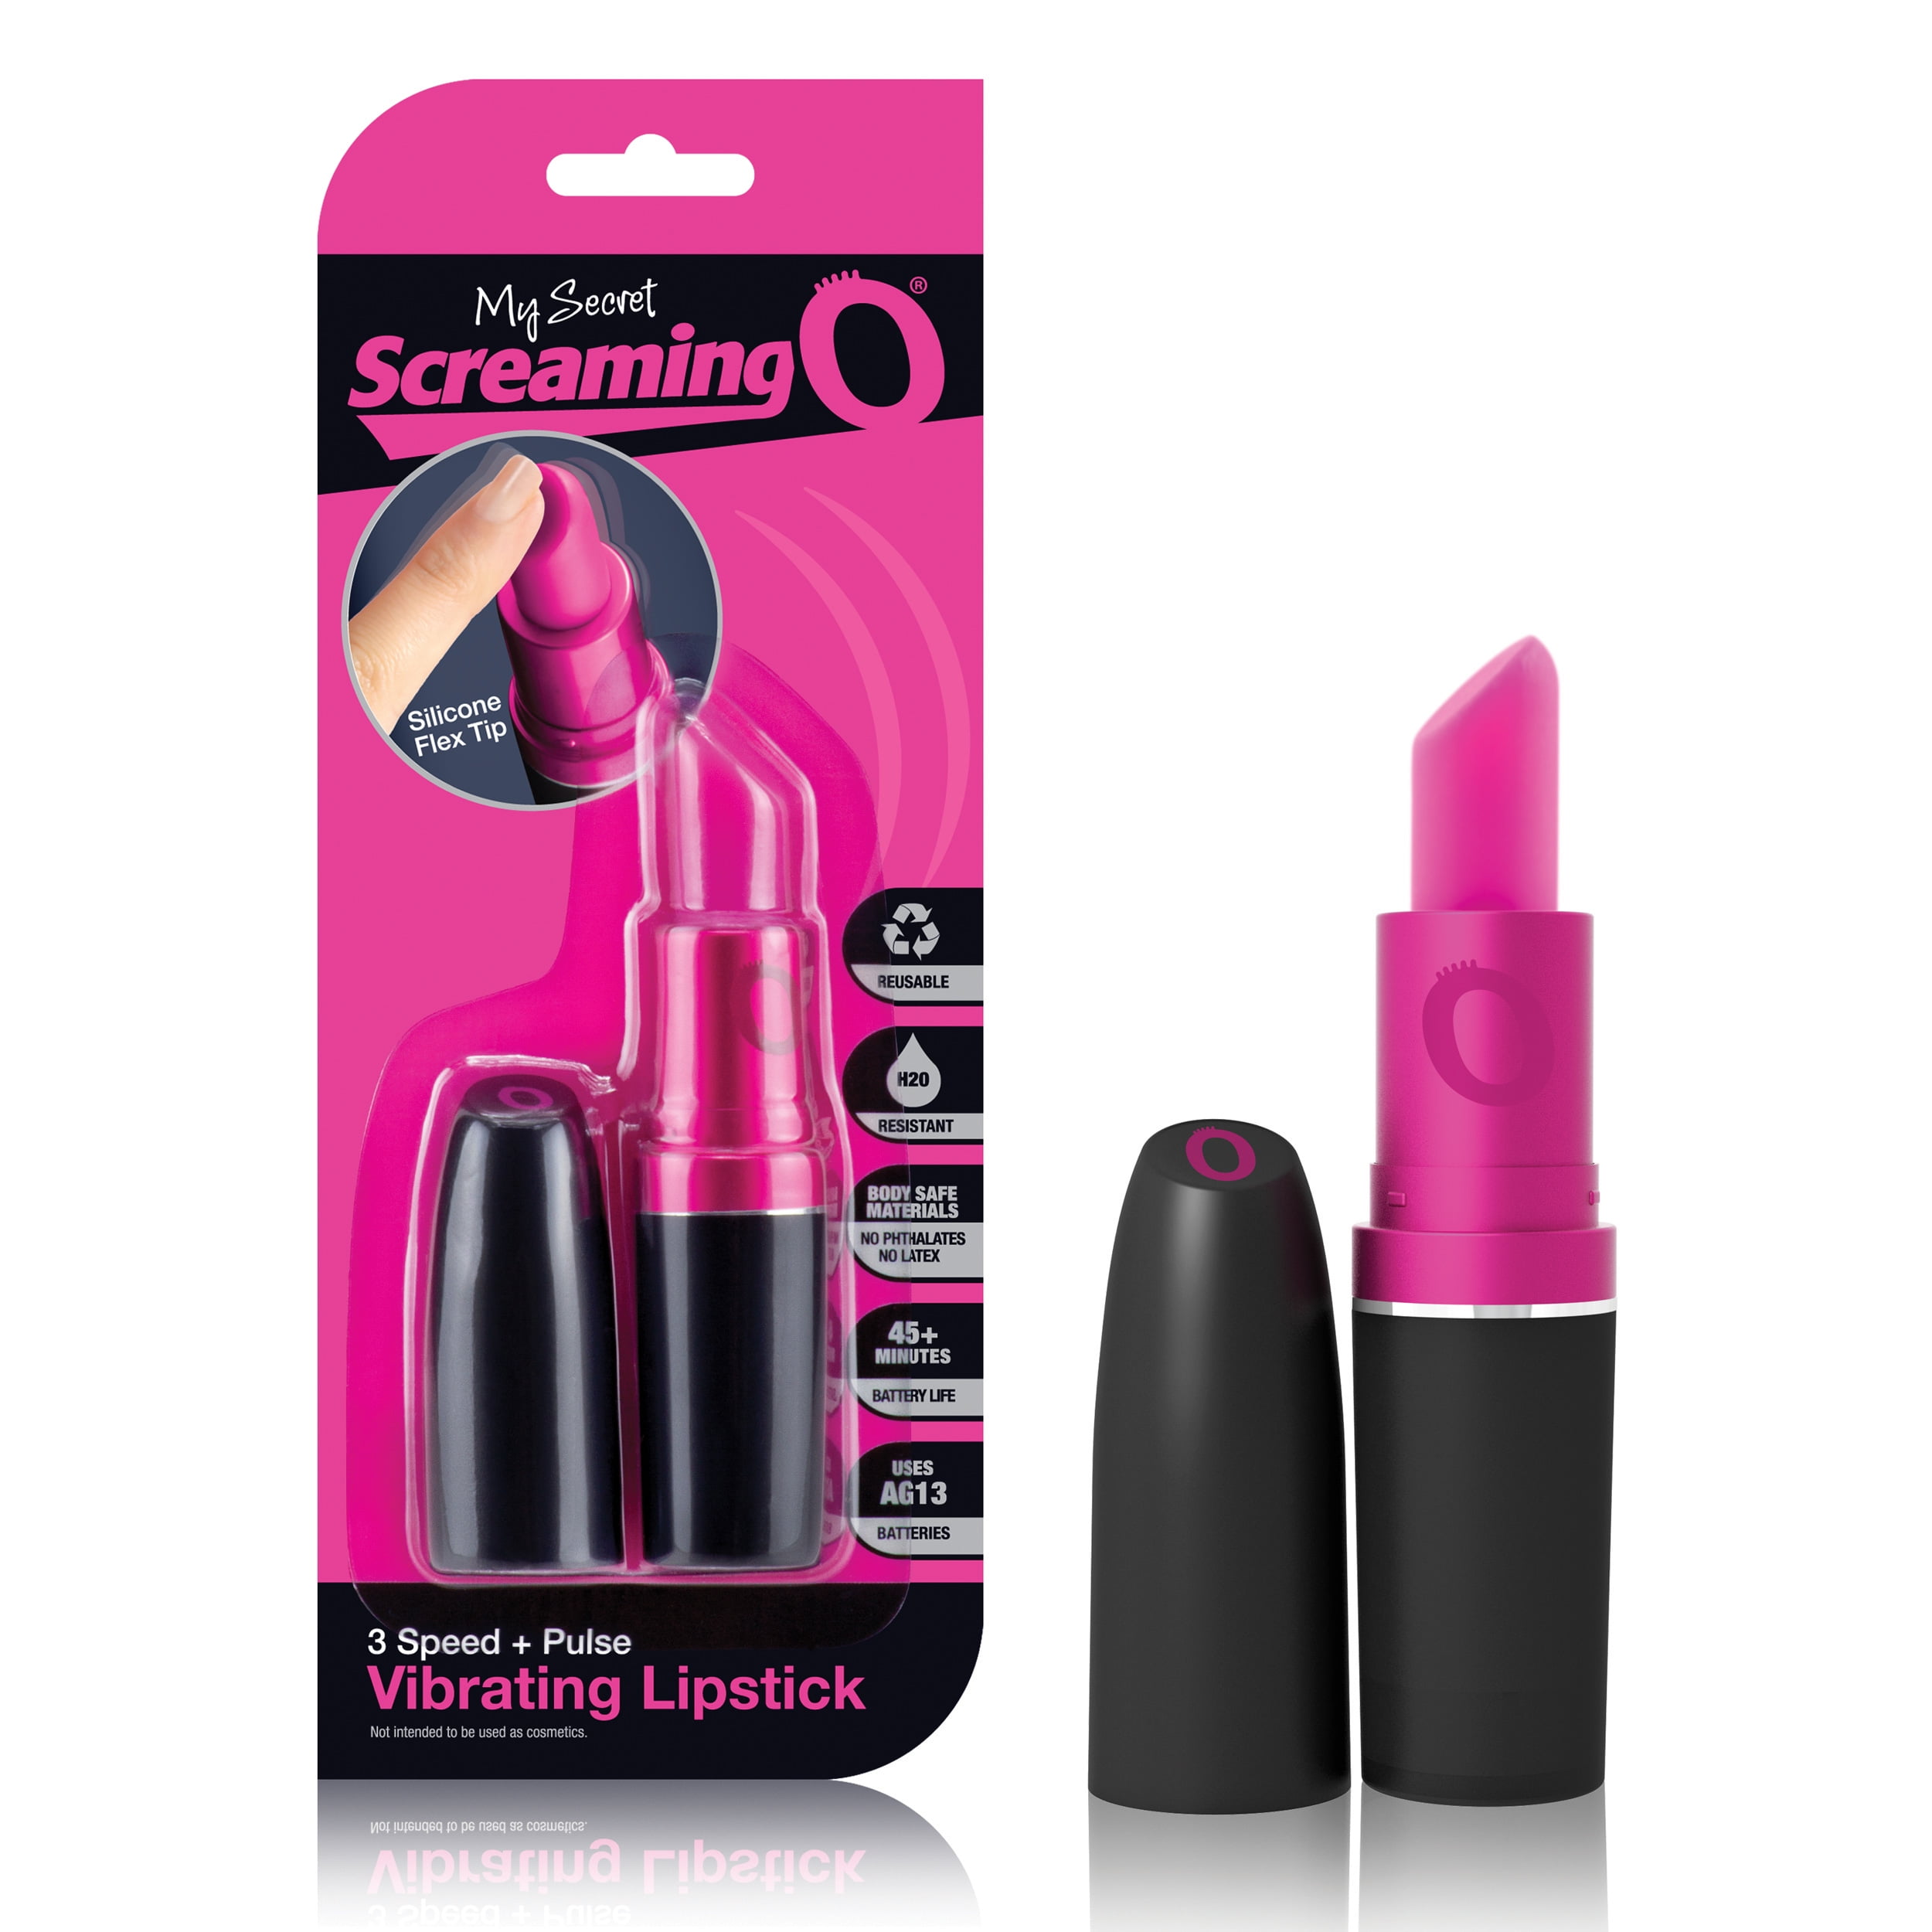 Screaming O My Secret Lipstick Vibrator with Soft-Silicone Flex Tip Pleasure Products picture